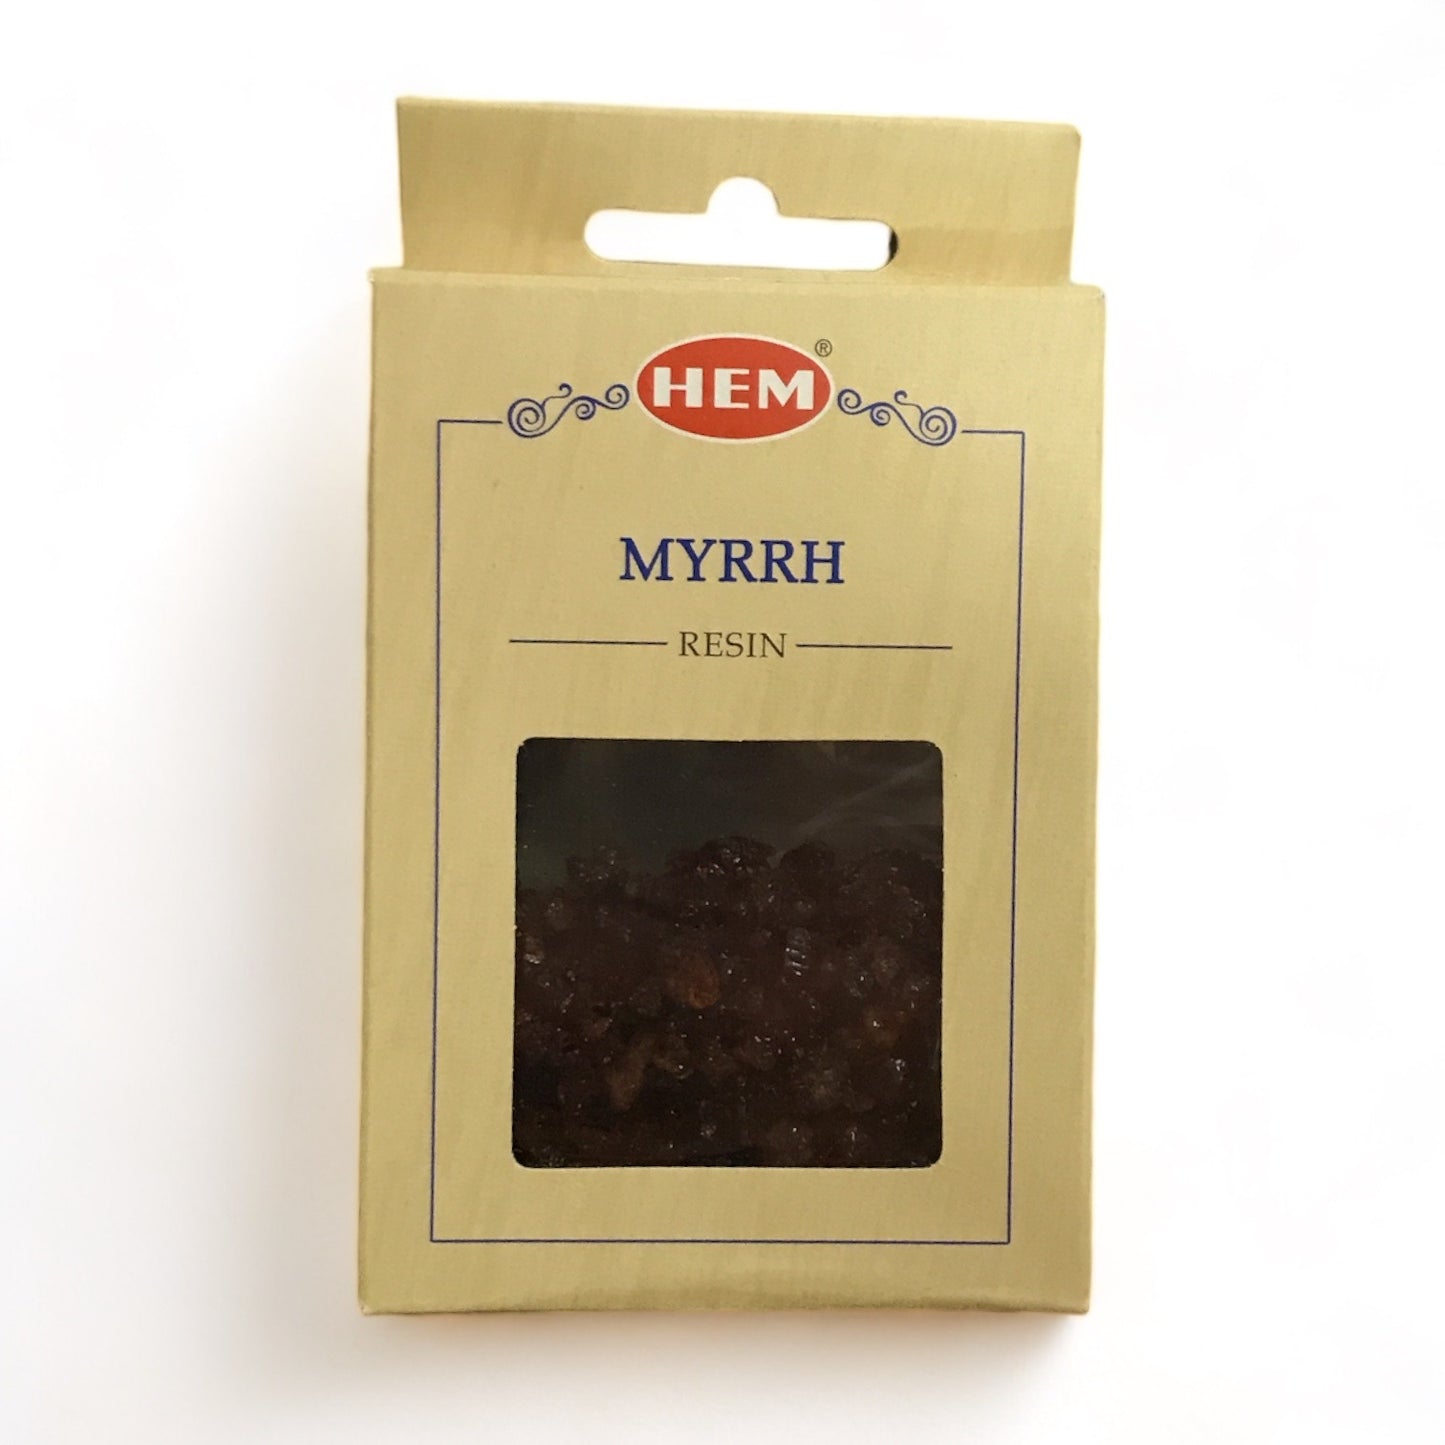 Myrrh Resin - Hem - 30g